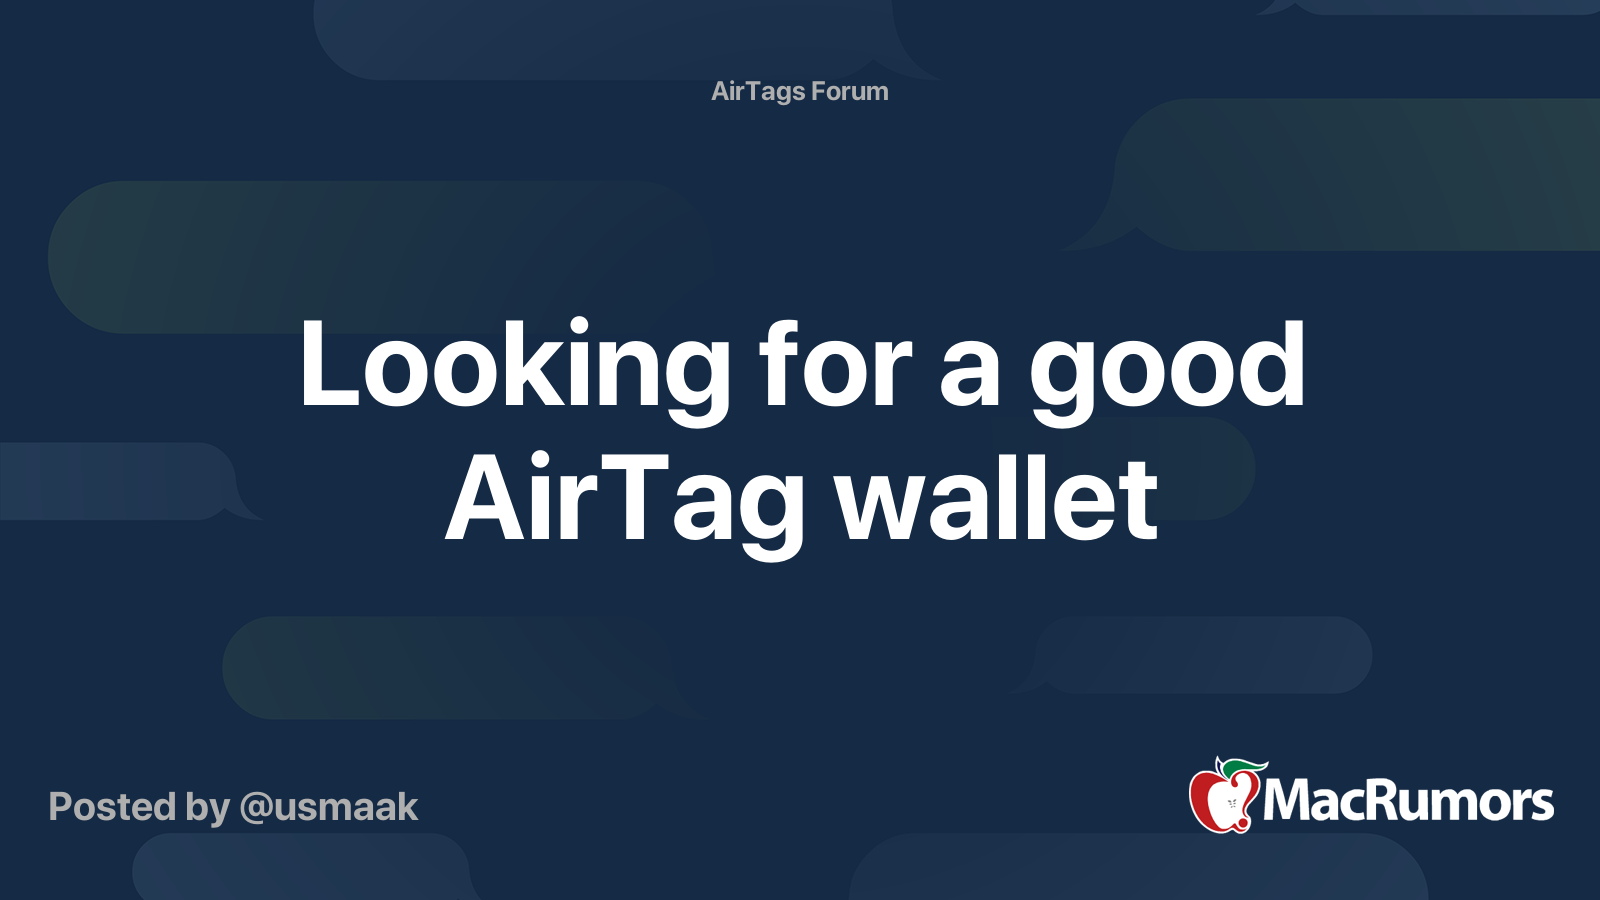 Why no company has made a good AirTag wallet